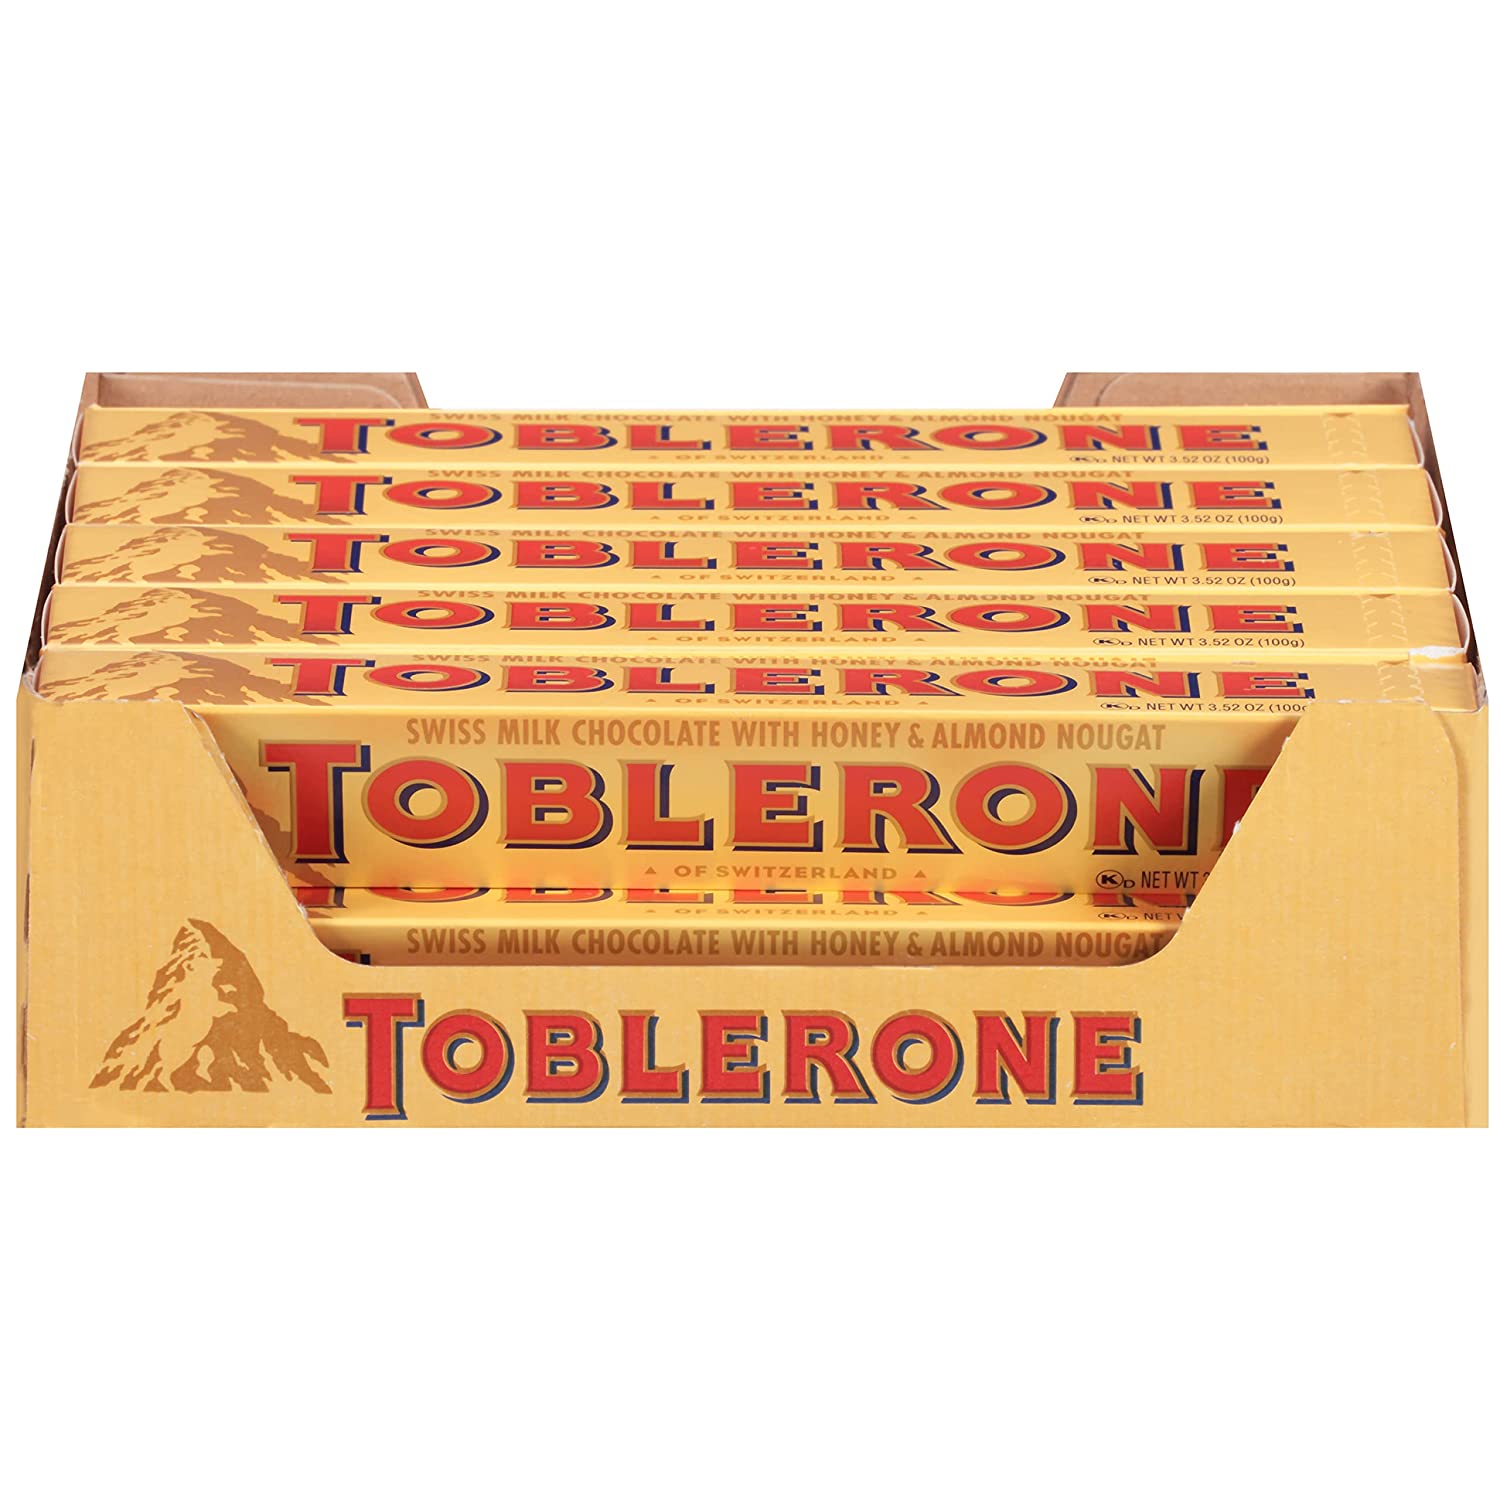 Toblerone - Swiss Milk Chocolate With Honey & Almond Nougat- Box of 24x1000G